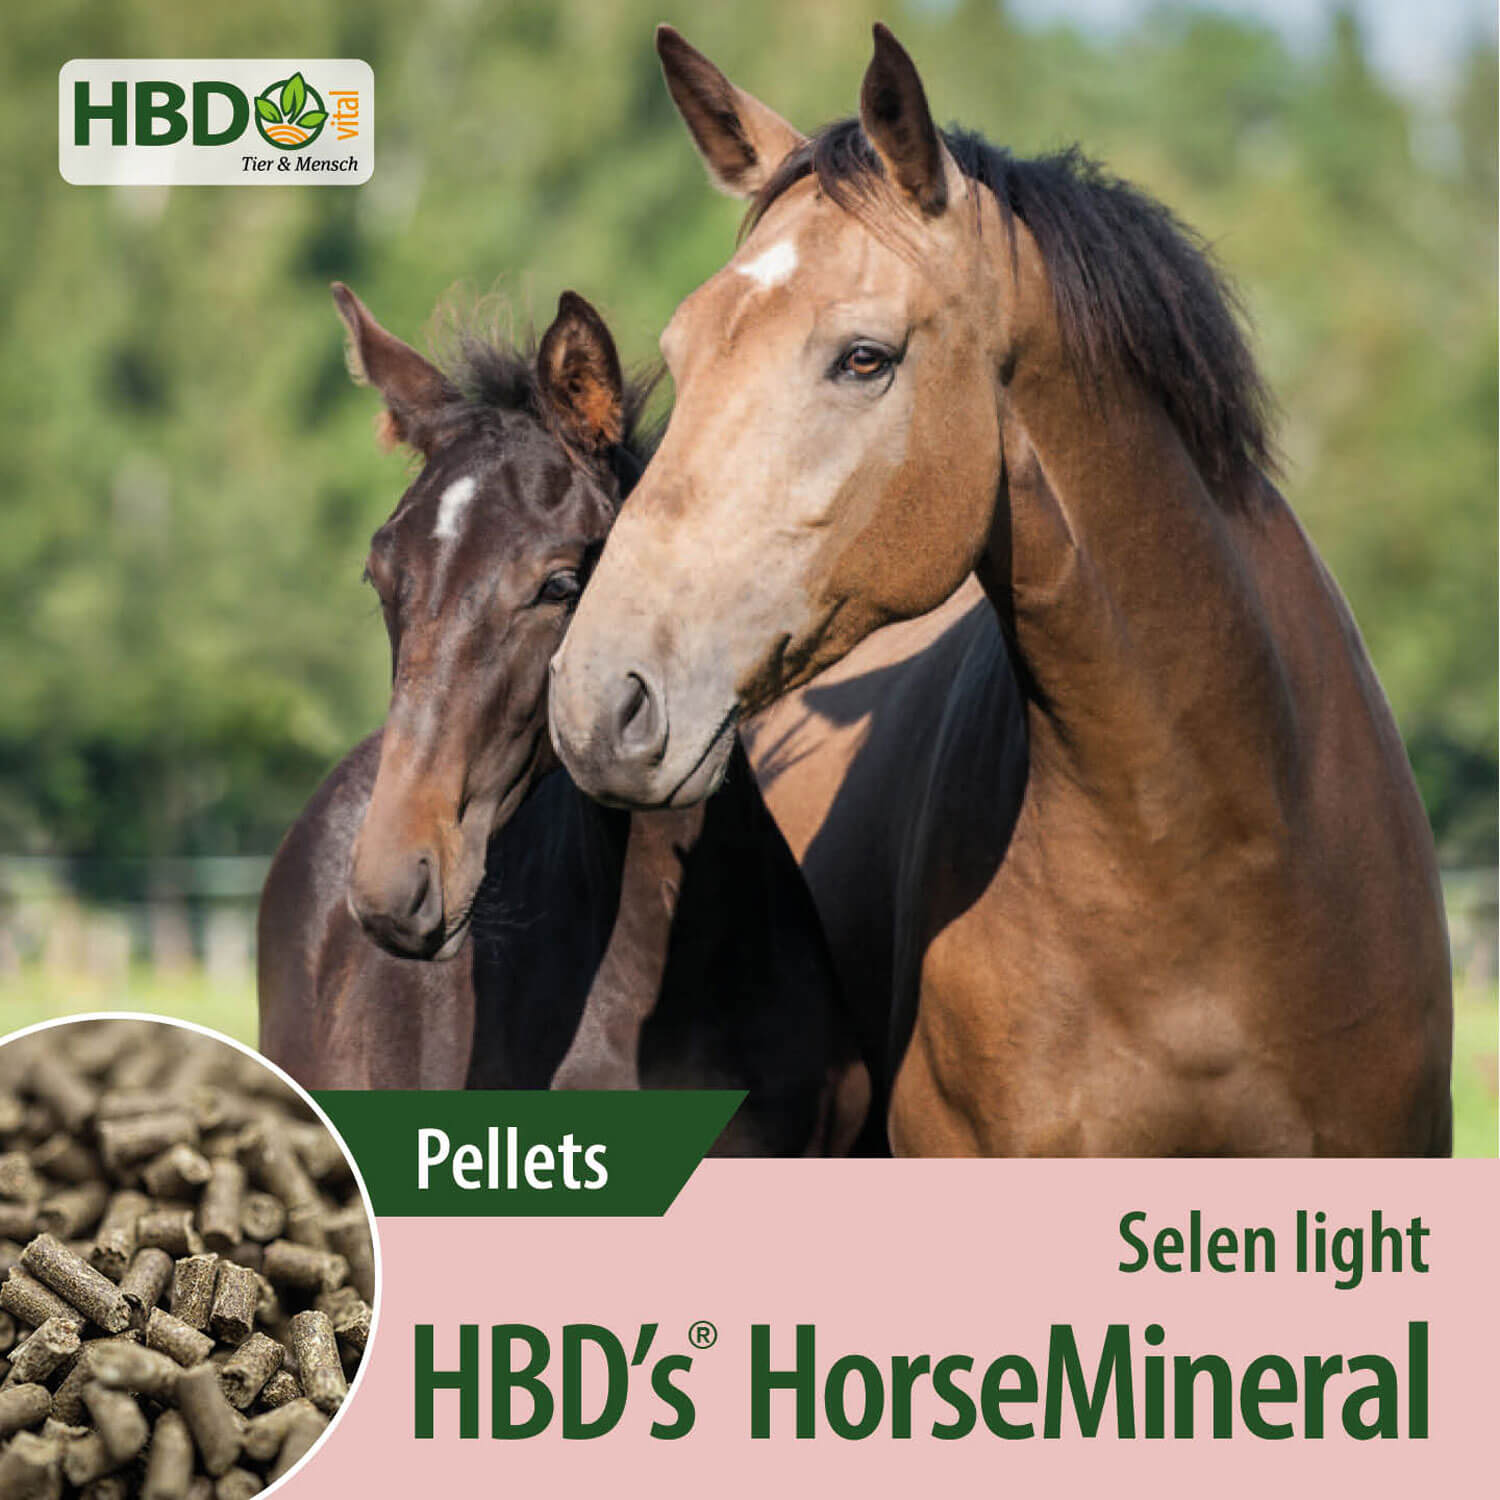 HBD-Agrar - HBD's® HorseMineral SELEN light - Mineralfutter mit reduziertem Selengehalt